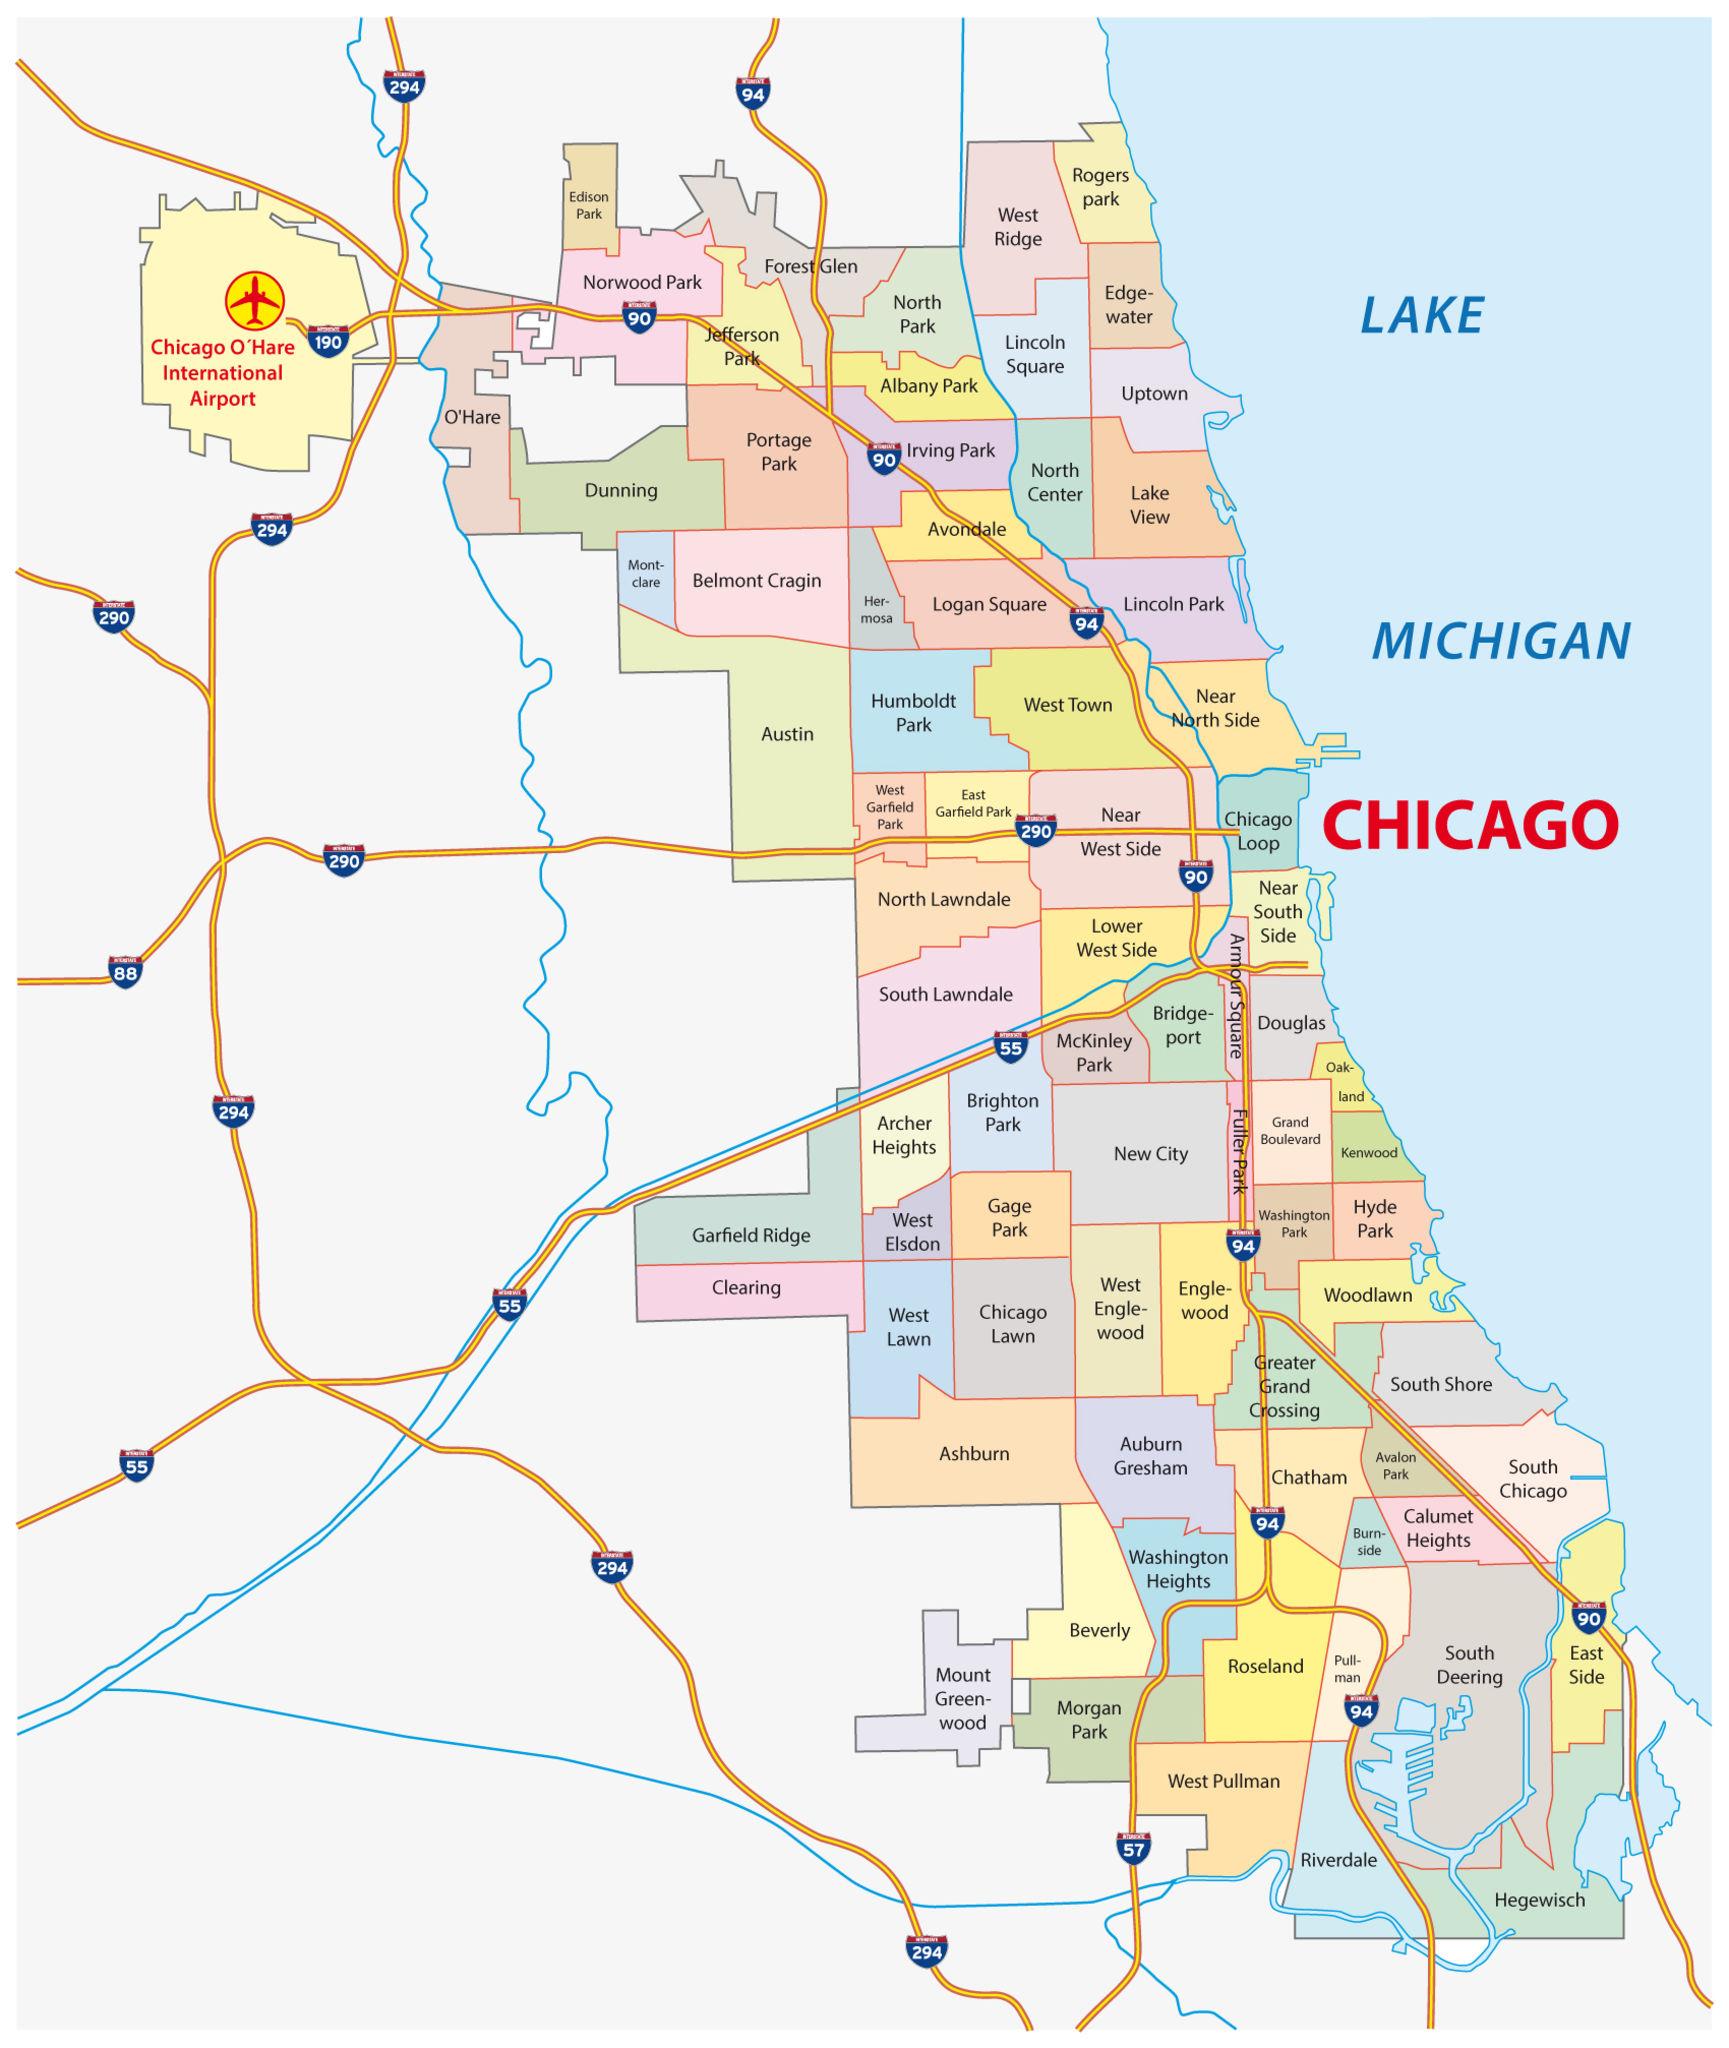 Map Of Chicago Neighborhood Surrounding Area And Suburbs Of Chicago. 